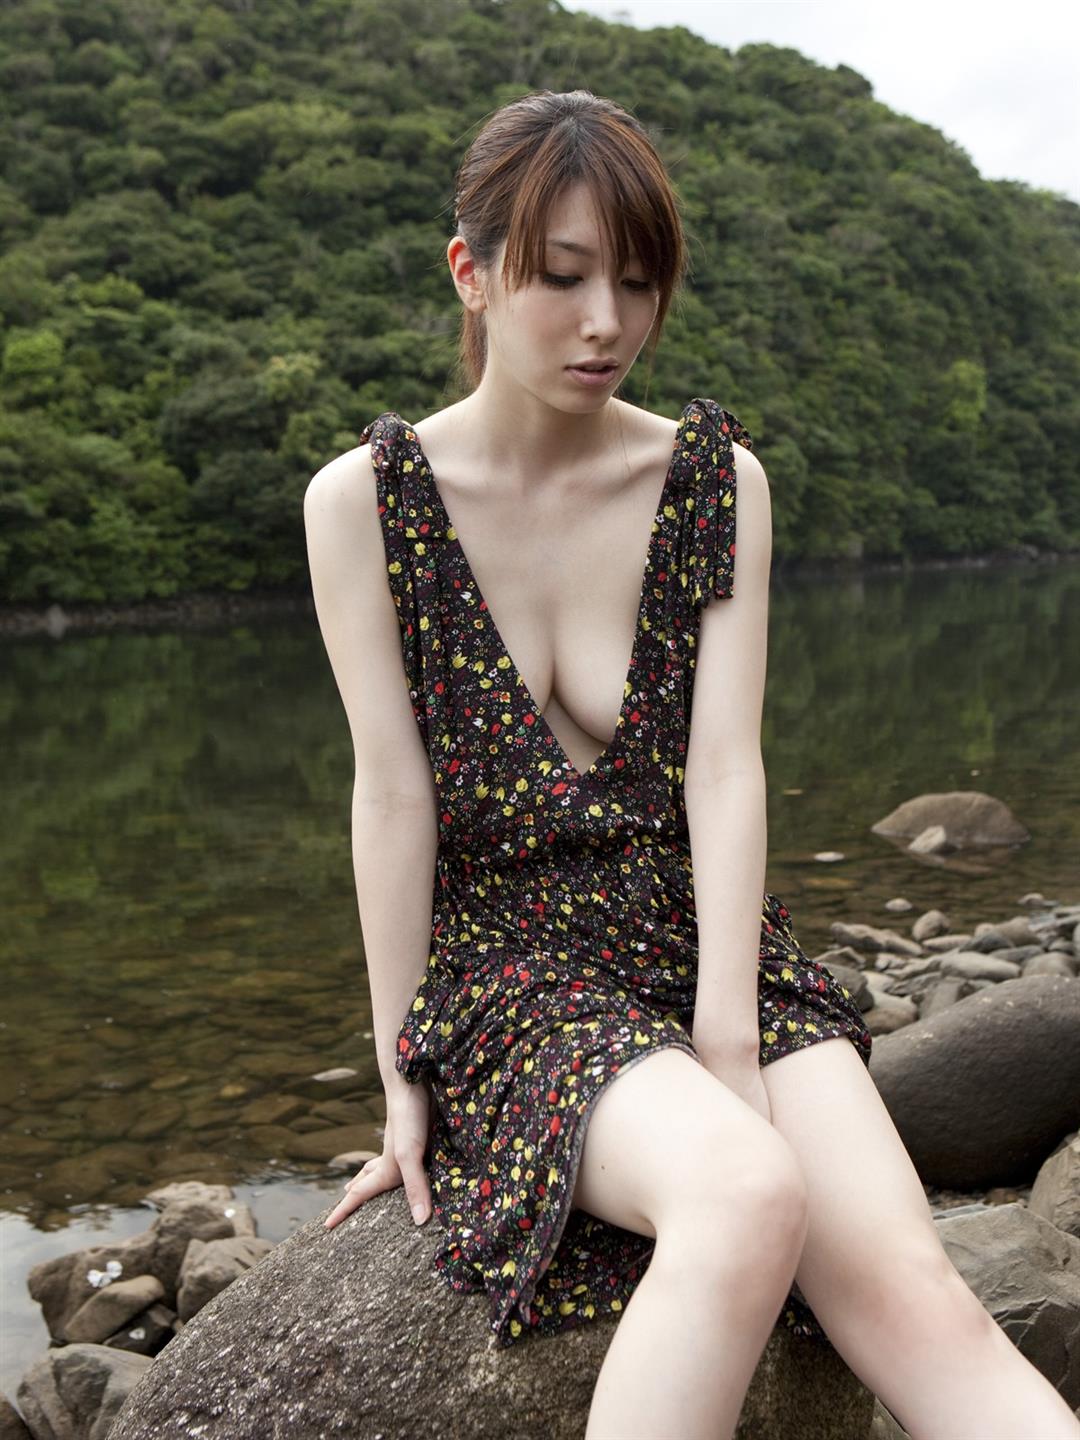 Sabra.net Emi Kobayashi 小林恵美 野外写真大胆裸露高清  - 18.jpg